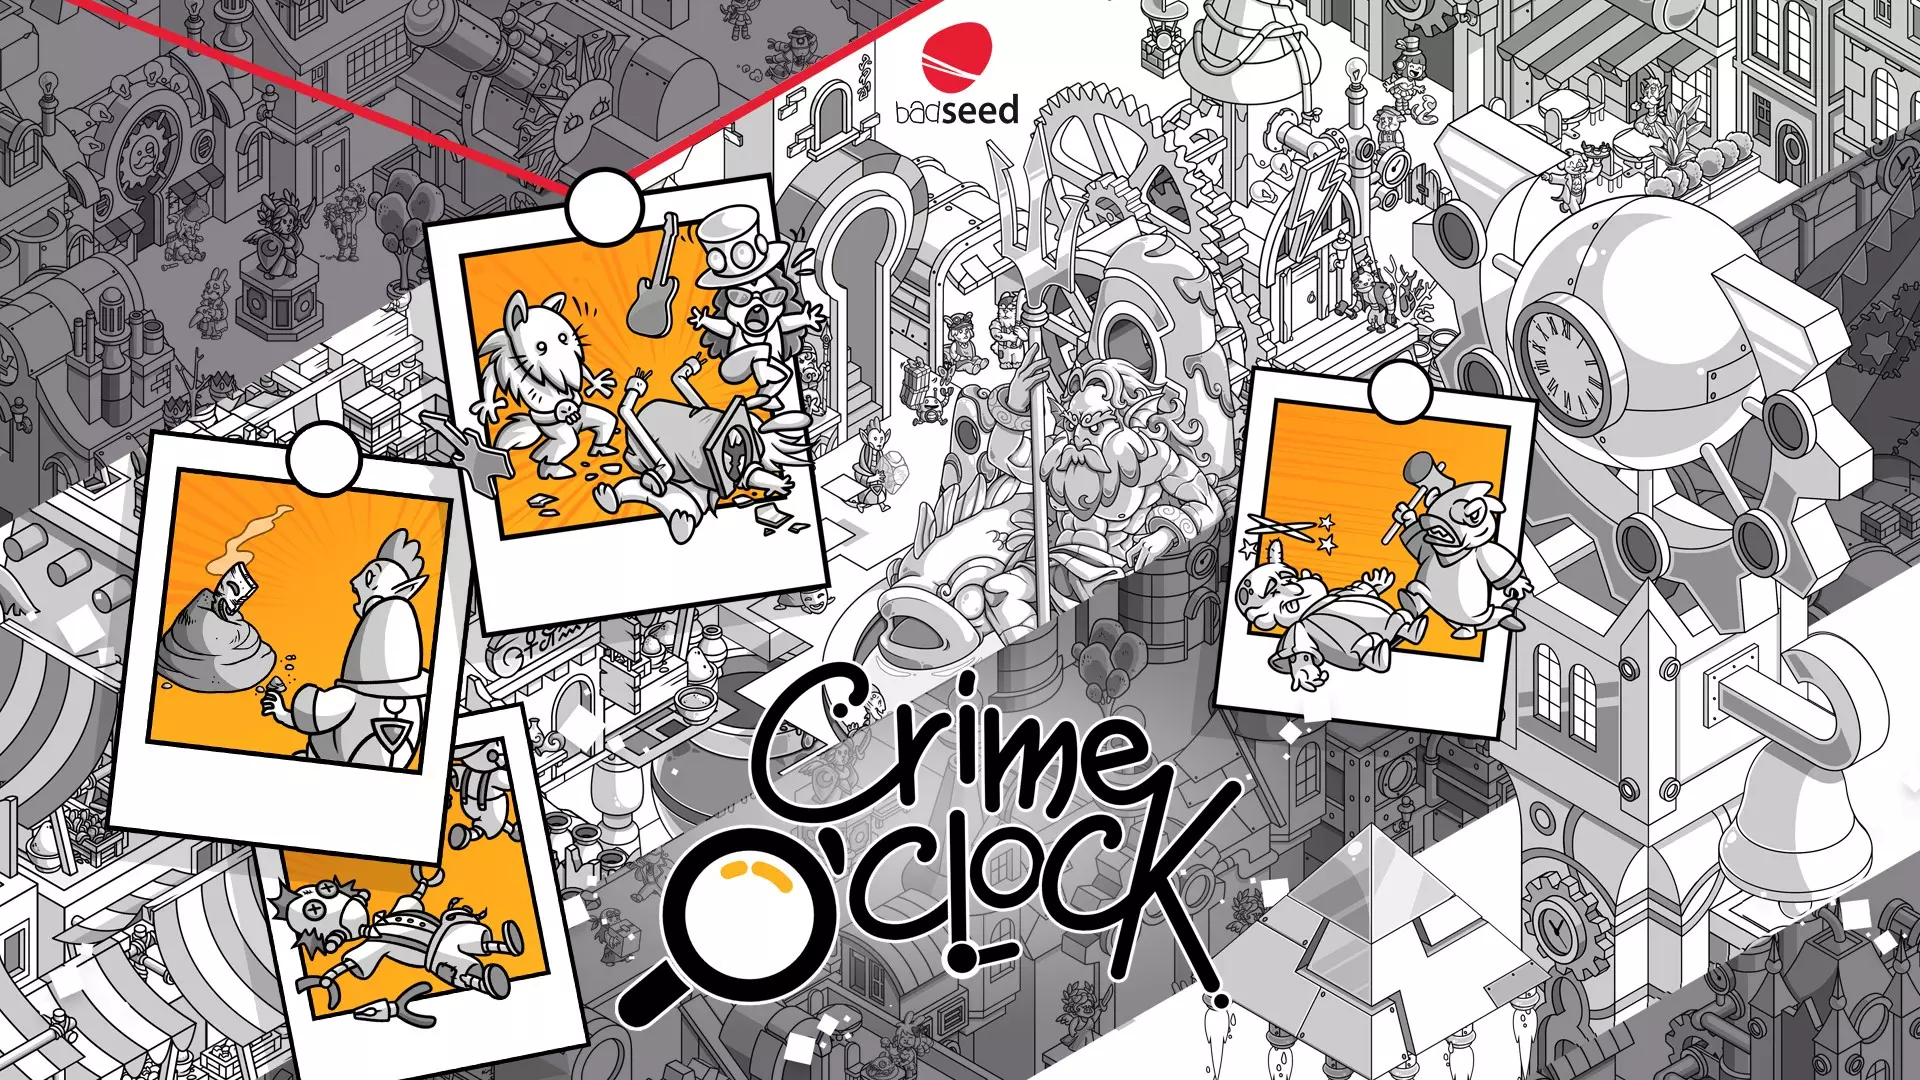 crimeoclock